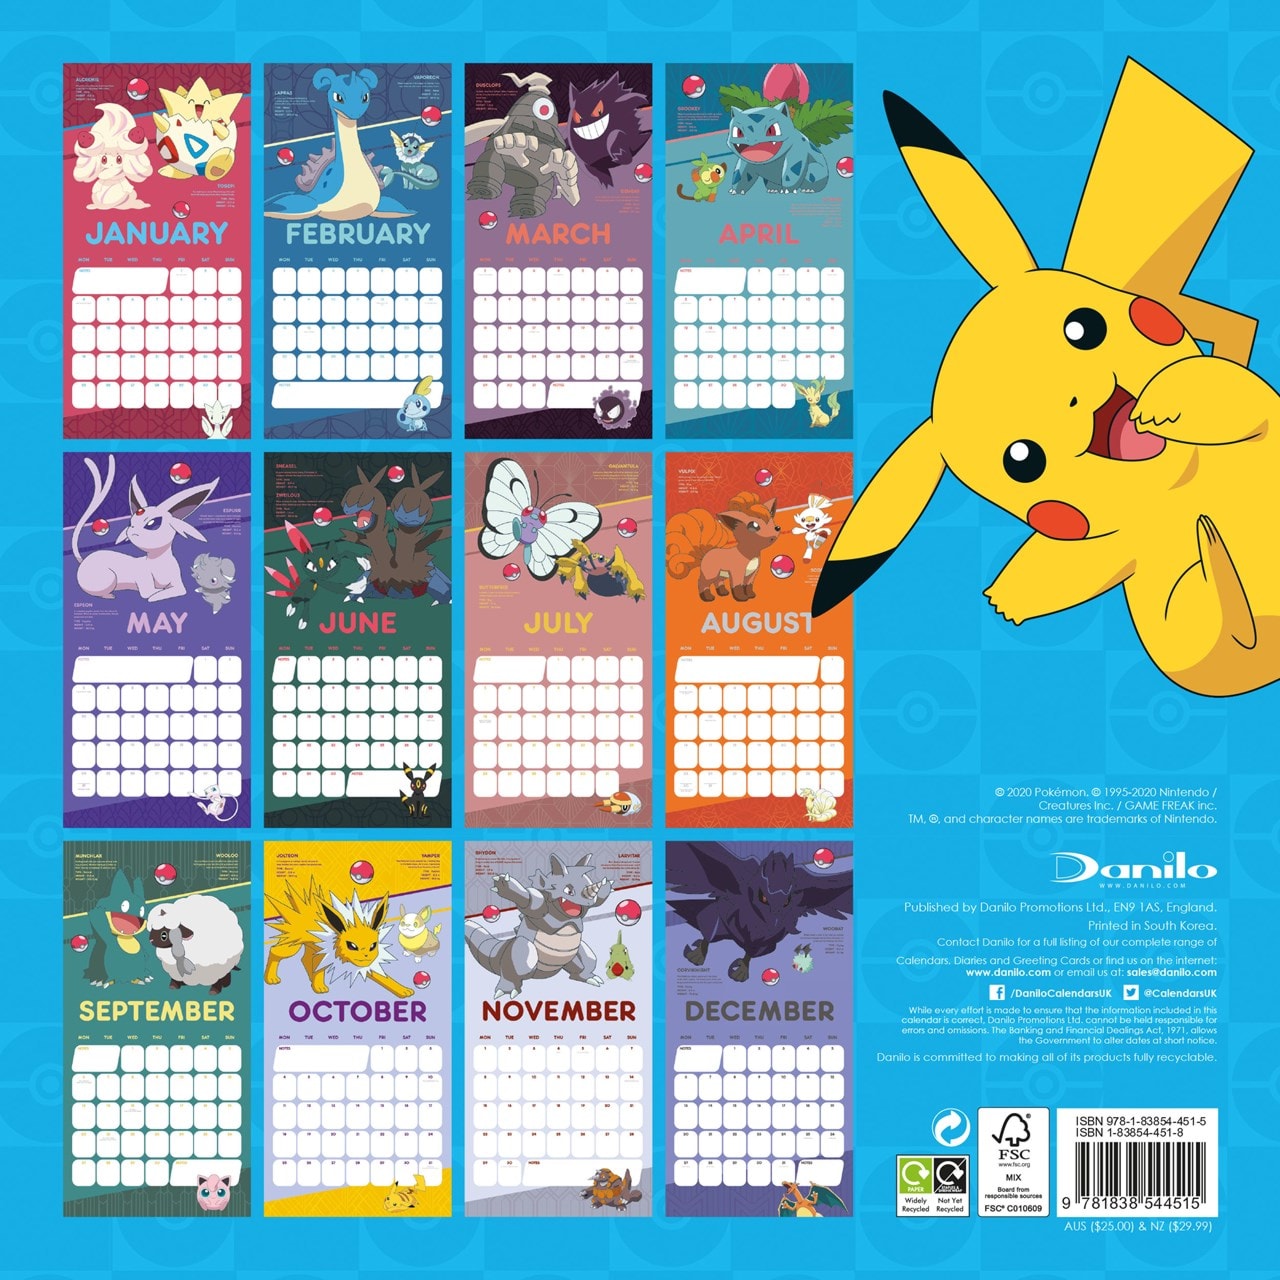 Pokemon Calendar April 2021 | Calendar APR 2021